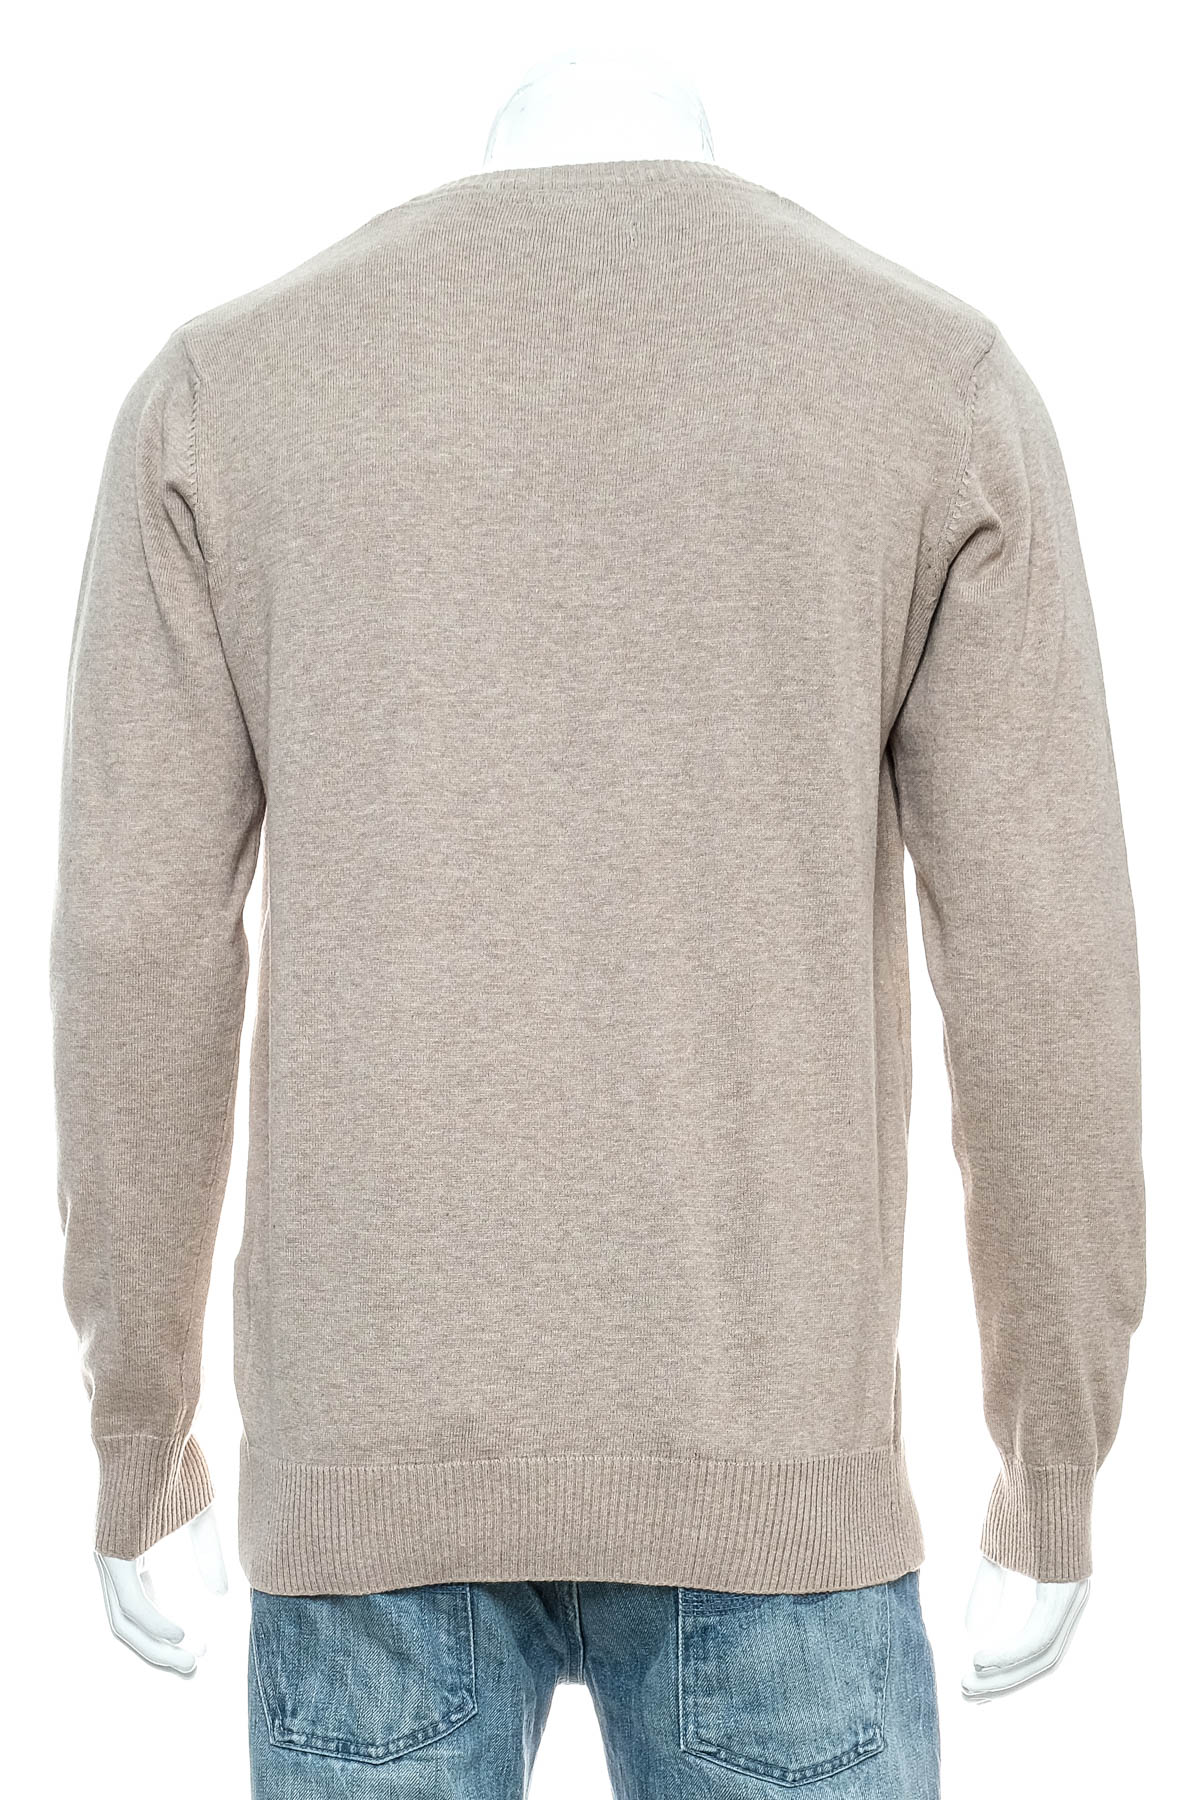 Men's sweater - KVL - 1